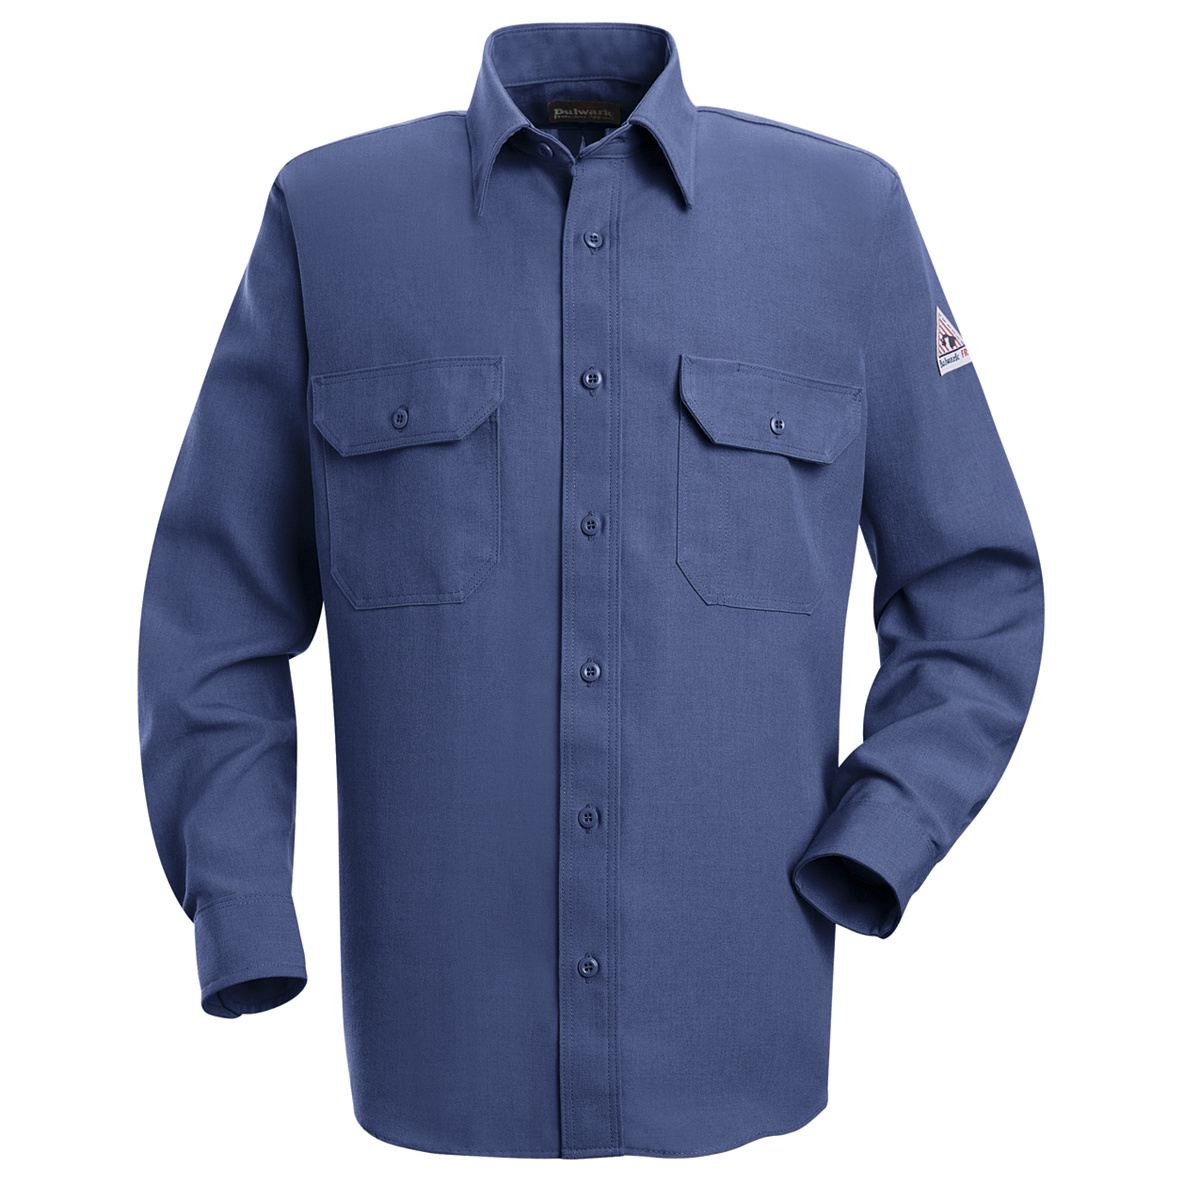 Bulwark® Medium Tall Gulf Blue Nomex® IIIA/Nomex® Aramid/Kevlar® Aramid Flame Resistant Uniform Shirt With Button Front Closure